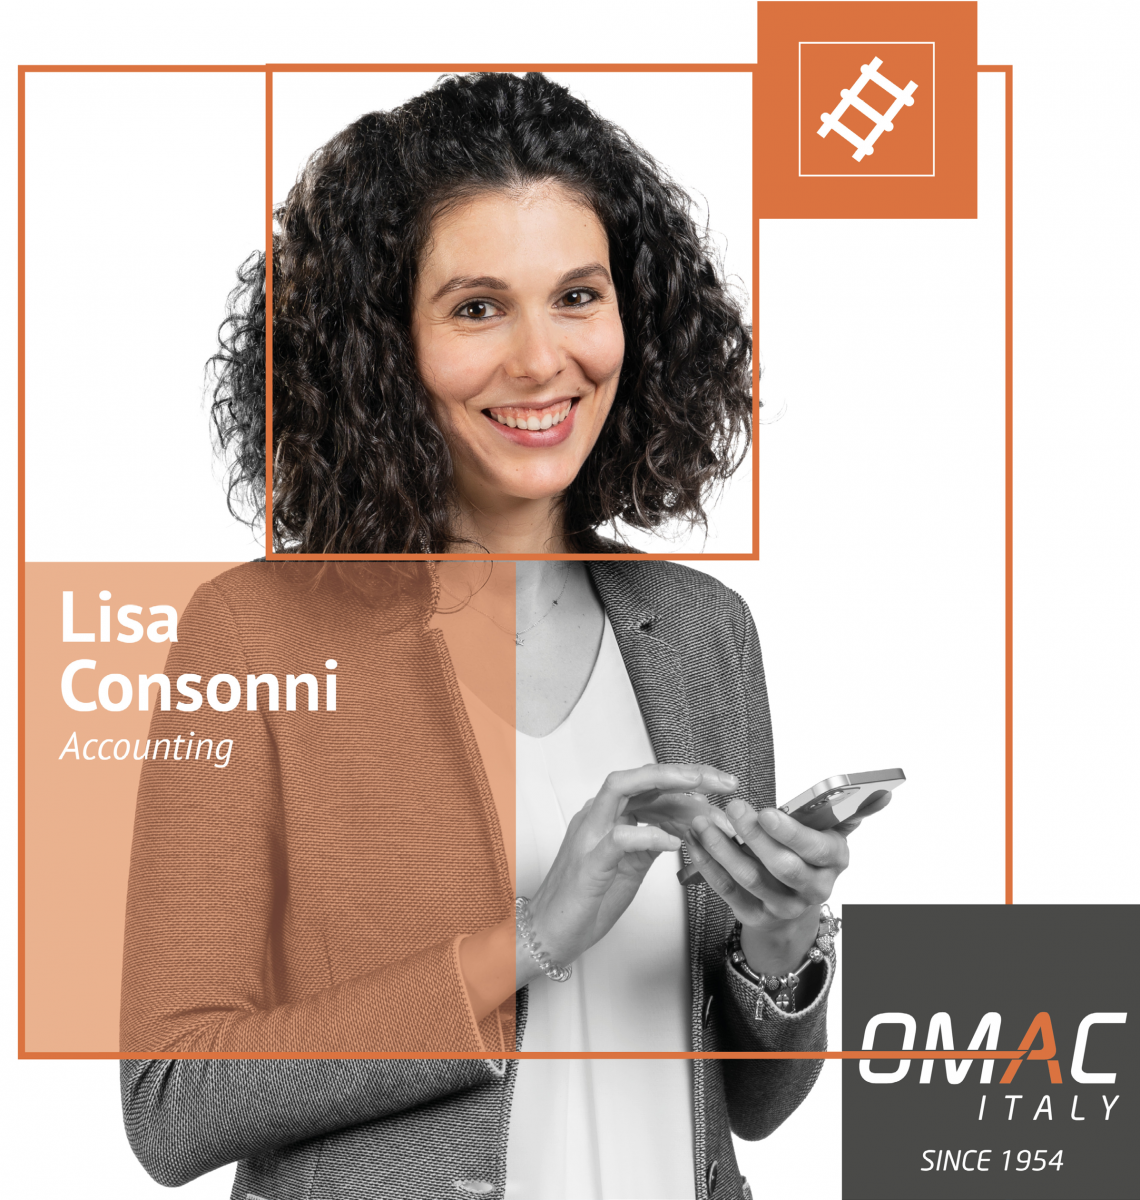 OMAC TEAM: LISA CONSONNI - ACCOUNTING